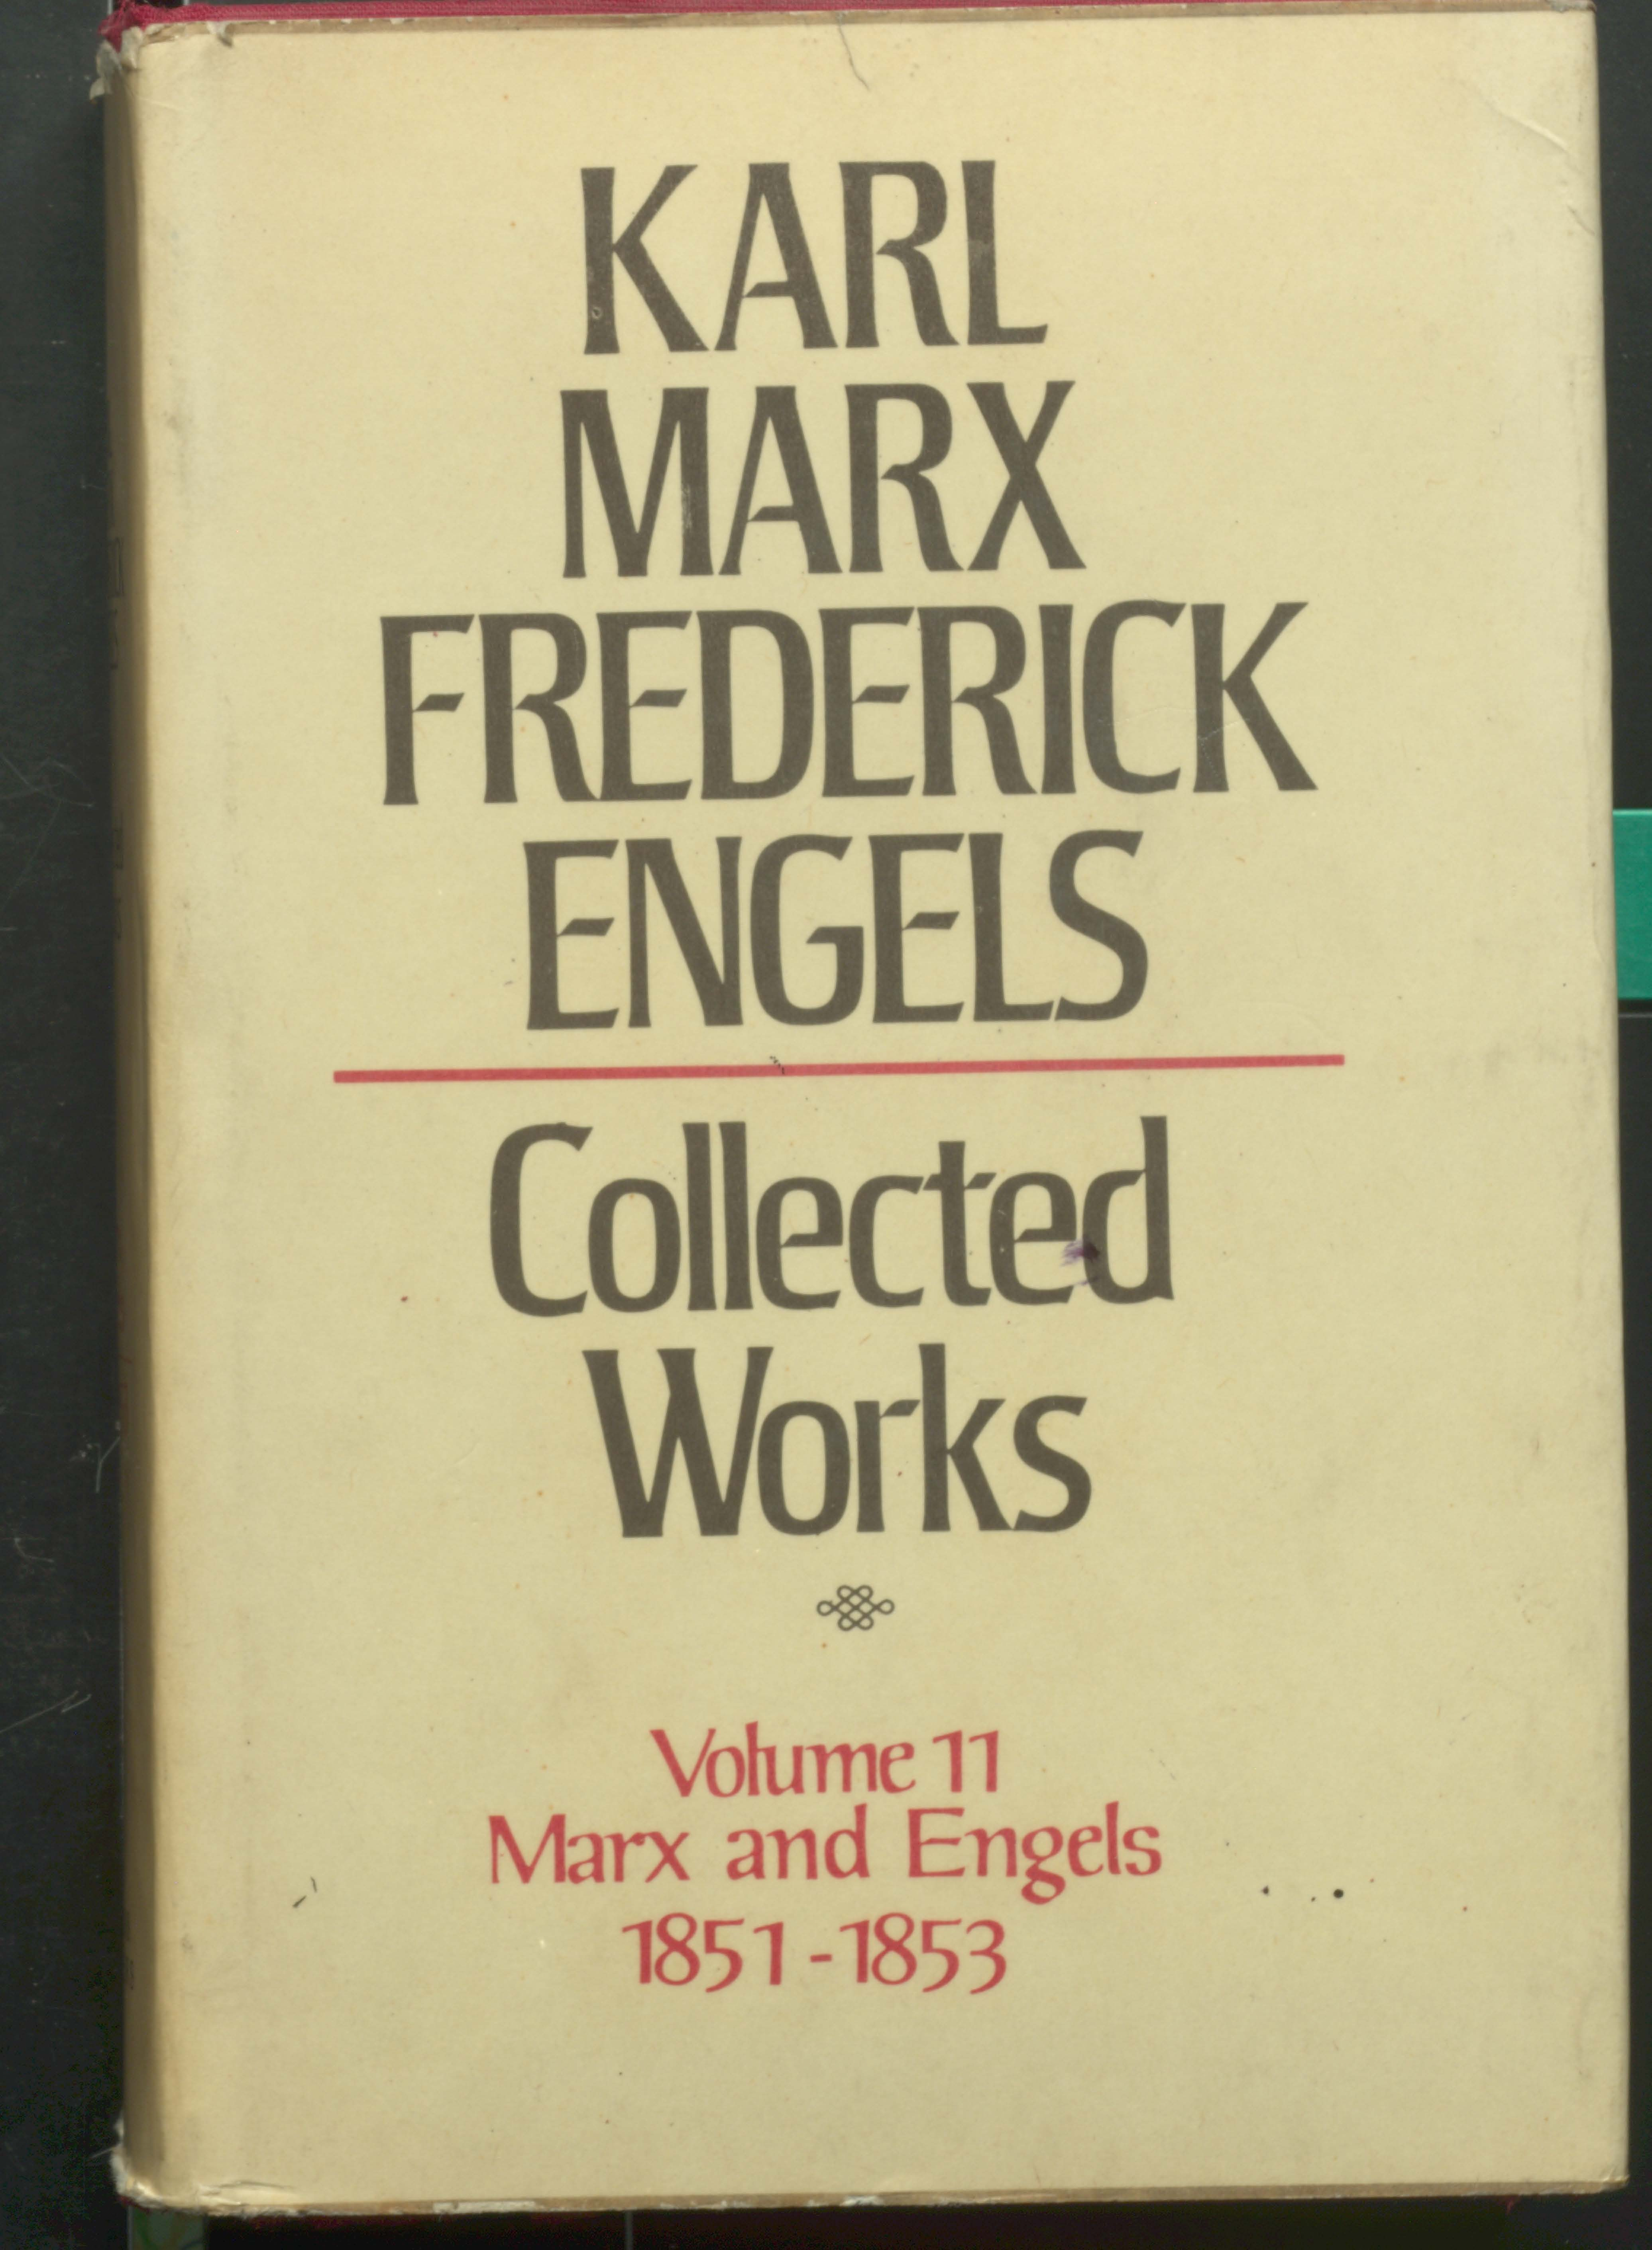 Karl Marx Frederick Engels Collected Works [Vol-11 1851-1853]